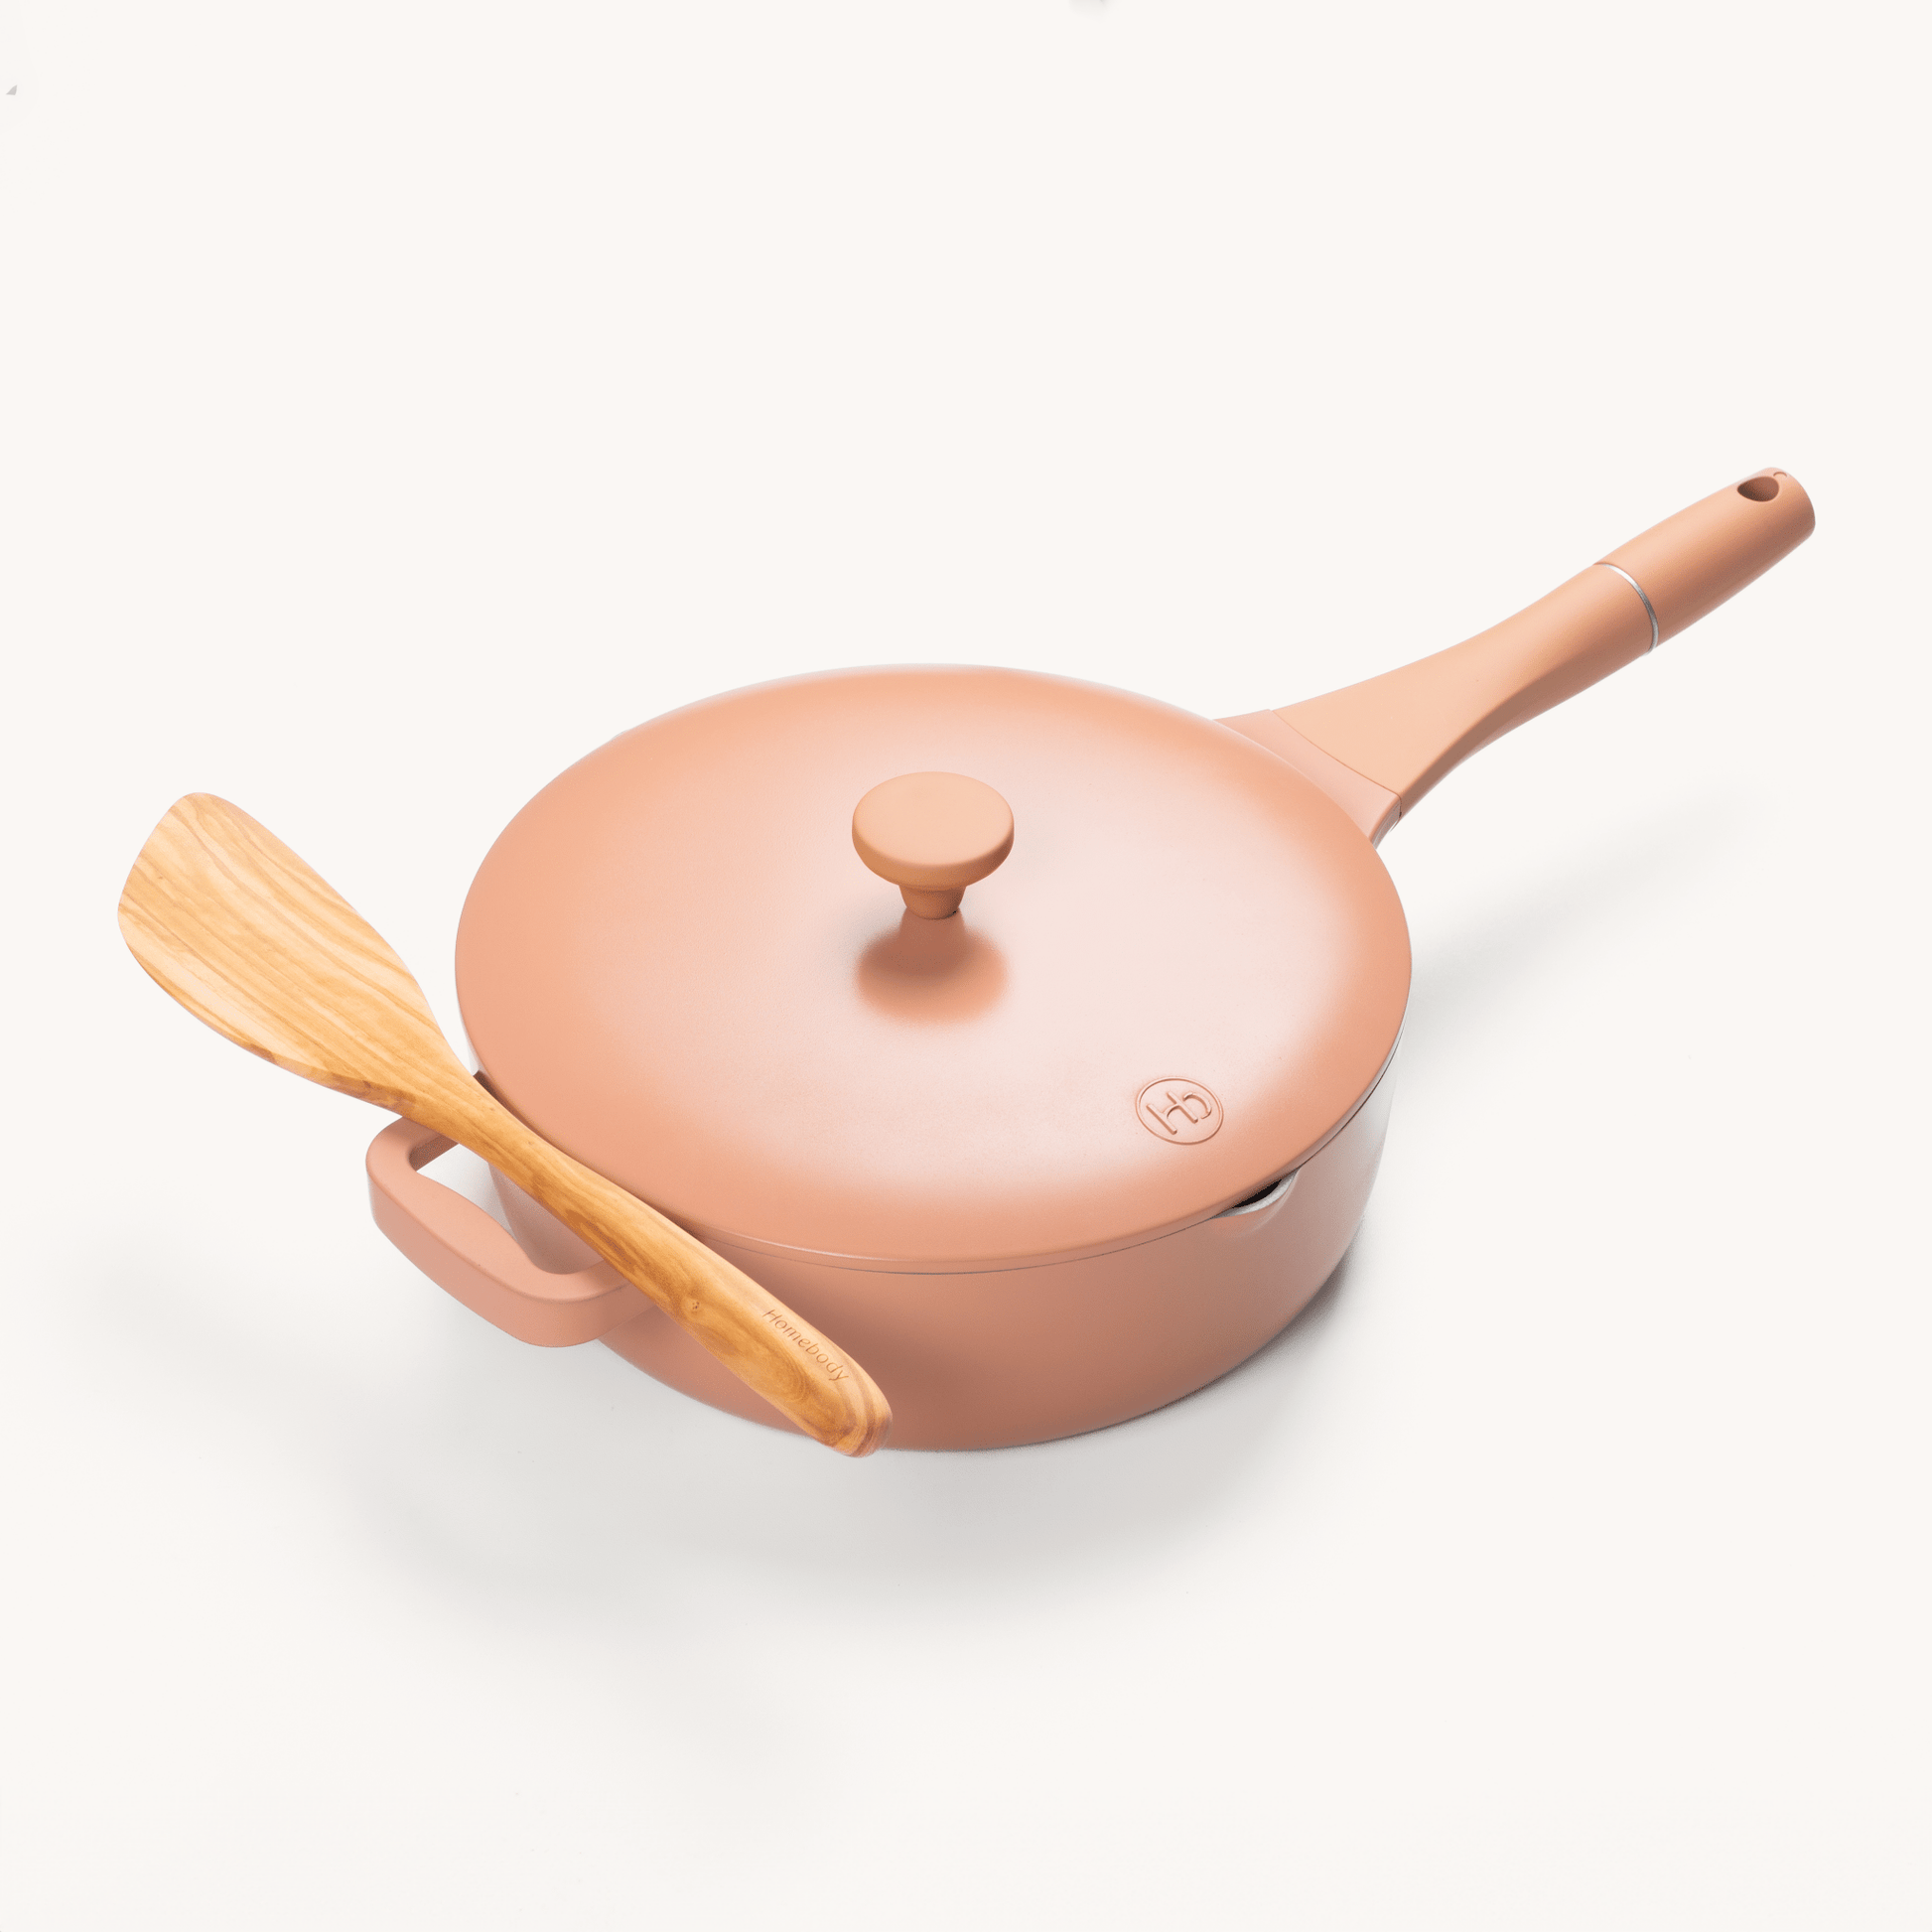 Olivewood Spatula - Homebody | Ceramic Non-stick cookware | No PFOA, PTFE